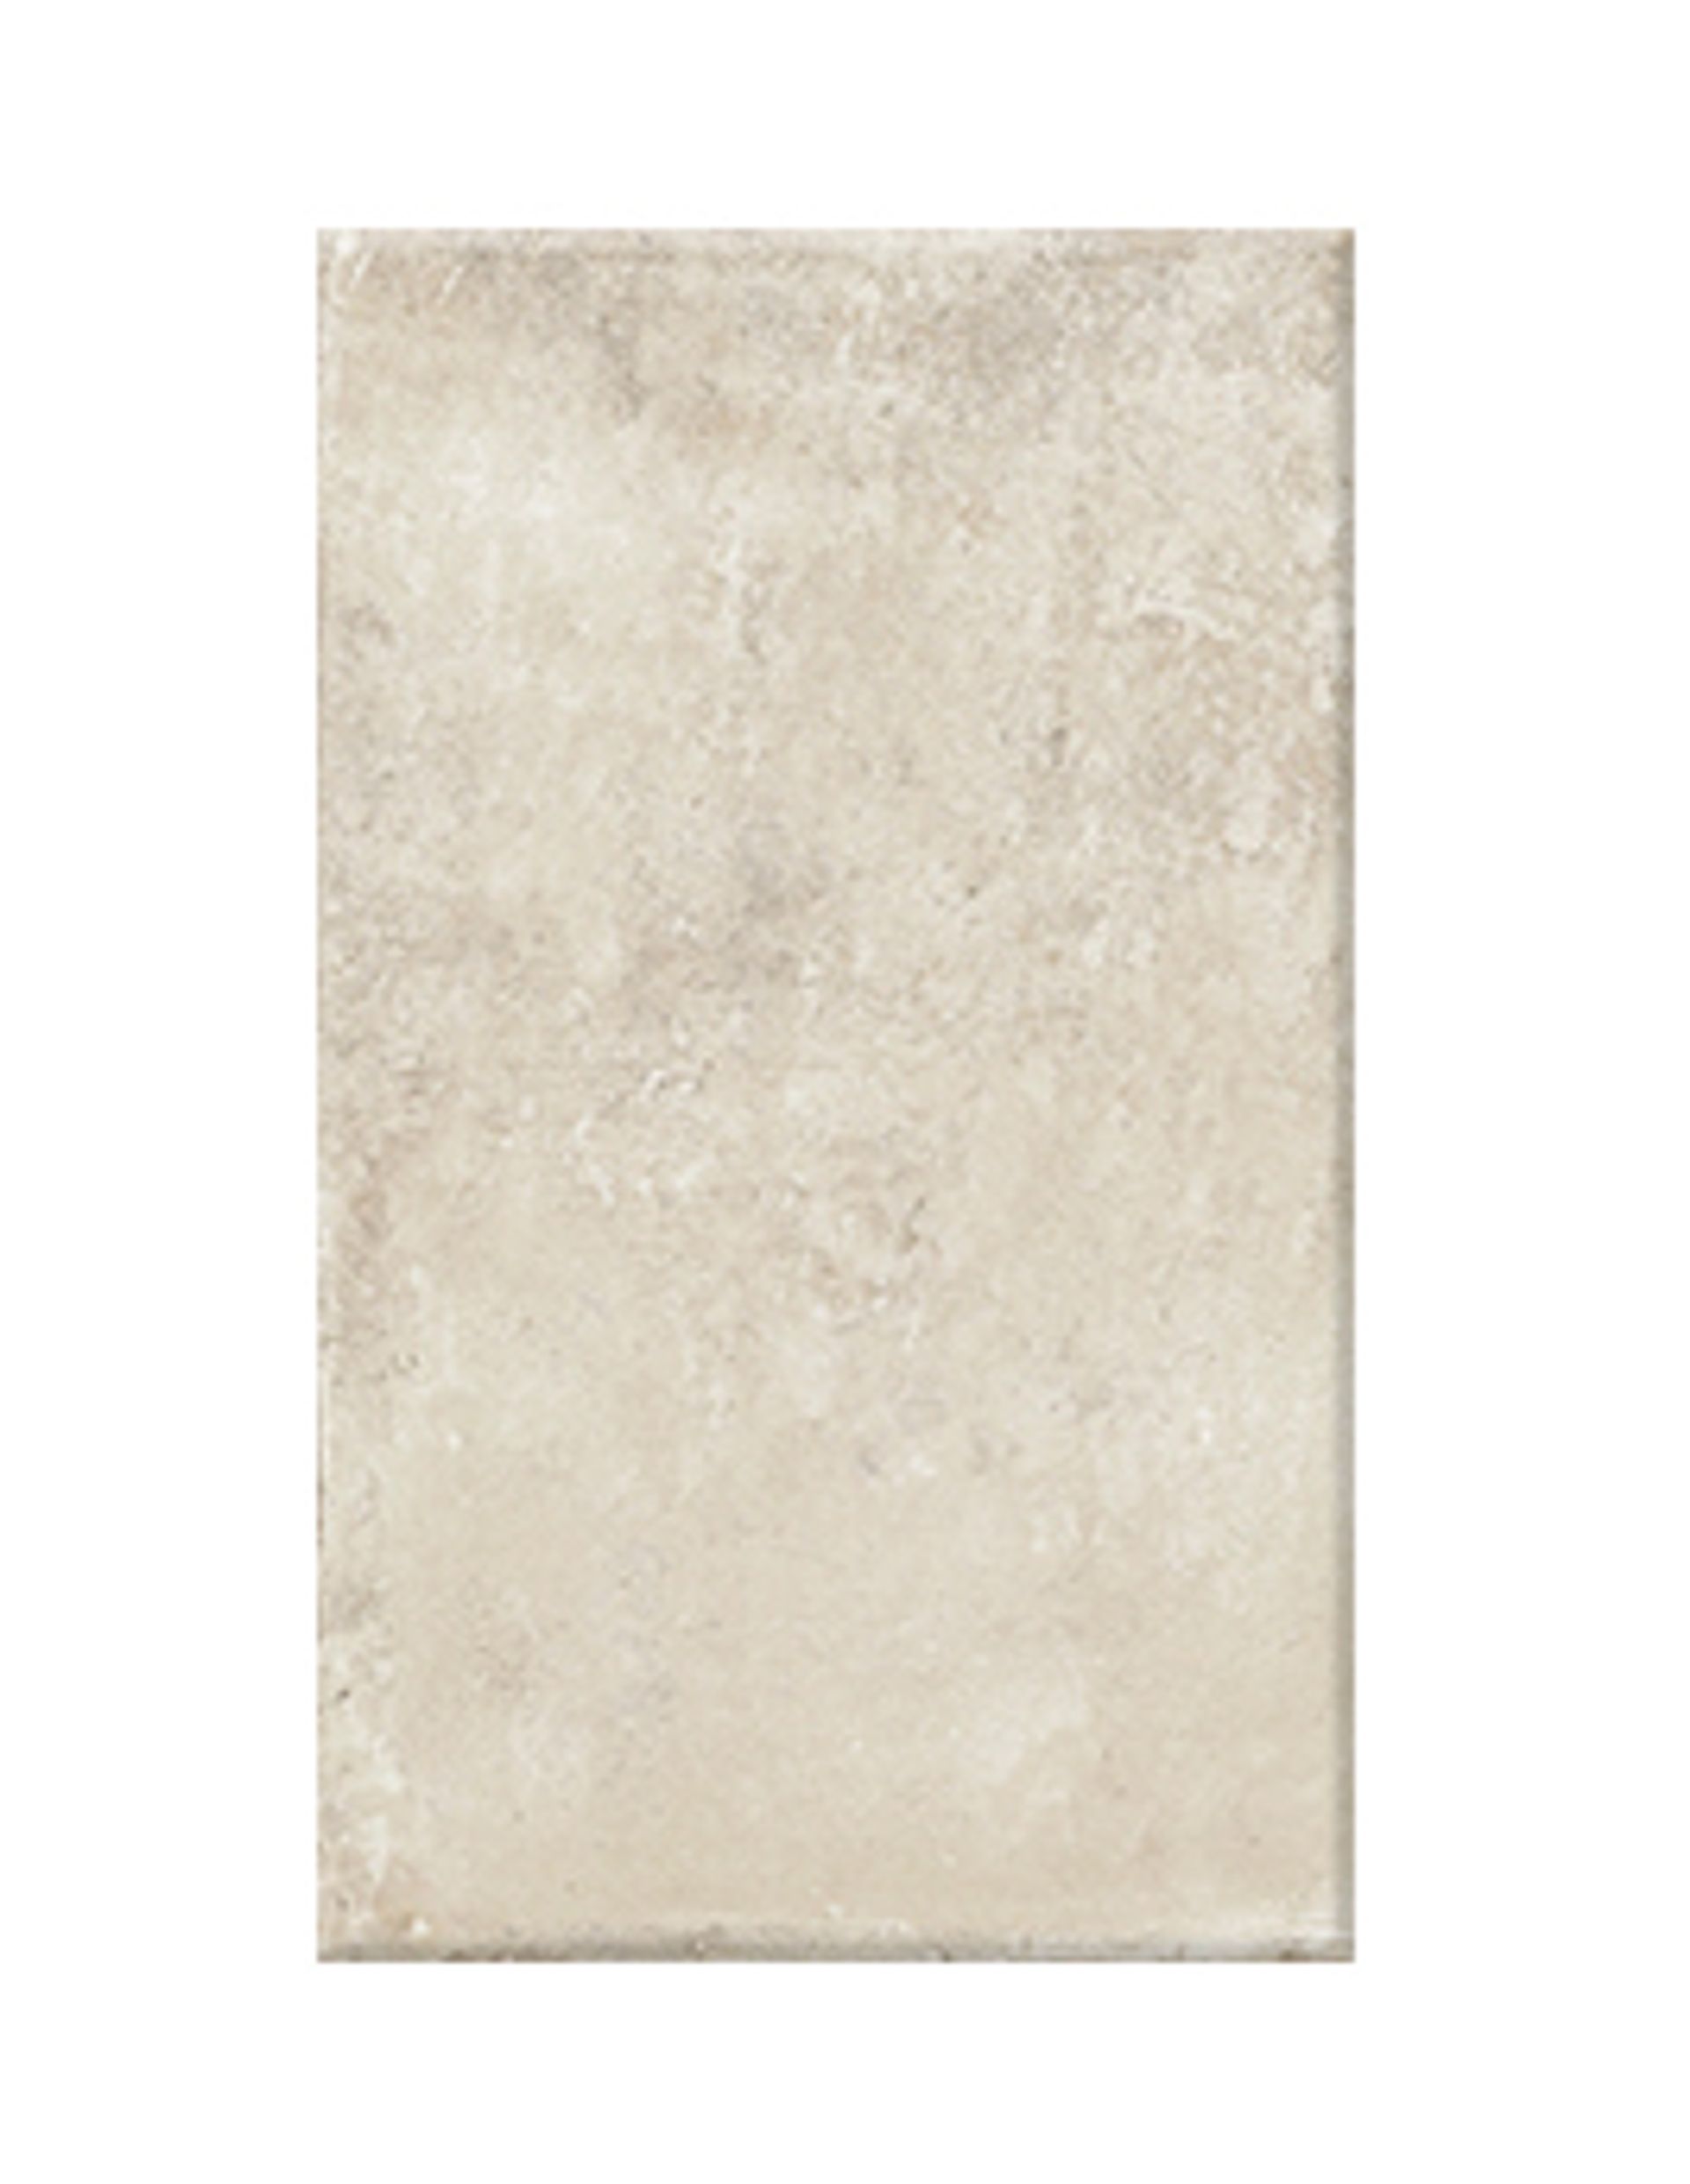 Carrelage NATURE GRIP, aspect pierre beige, dim 30.00 x 30.00 cm